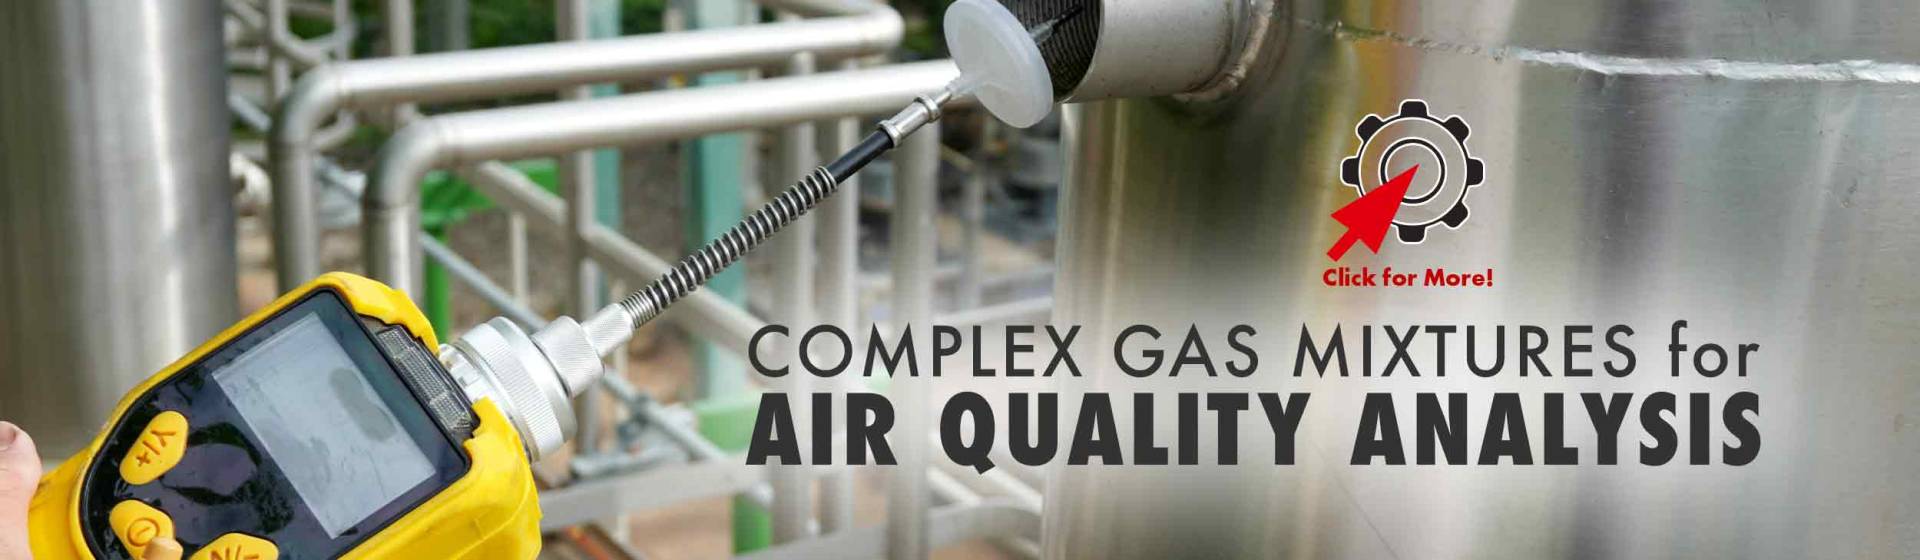 KIN-TEK Complex Gas Mixtures for Air Quality Analysis Banner